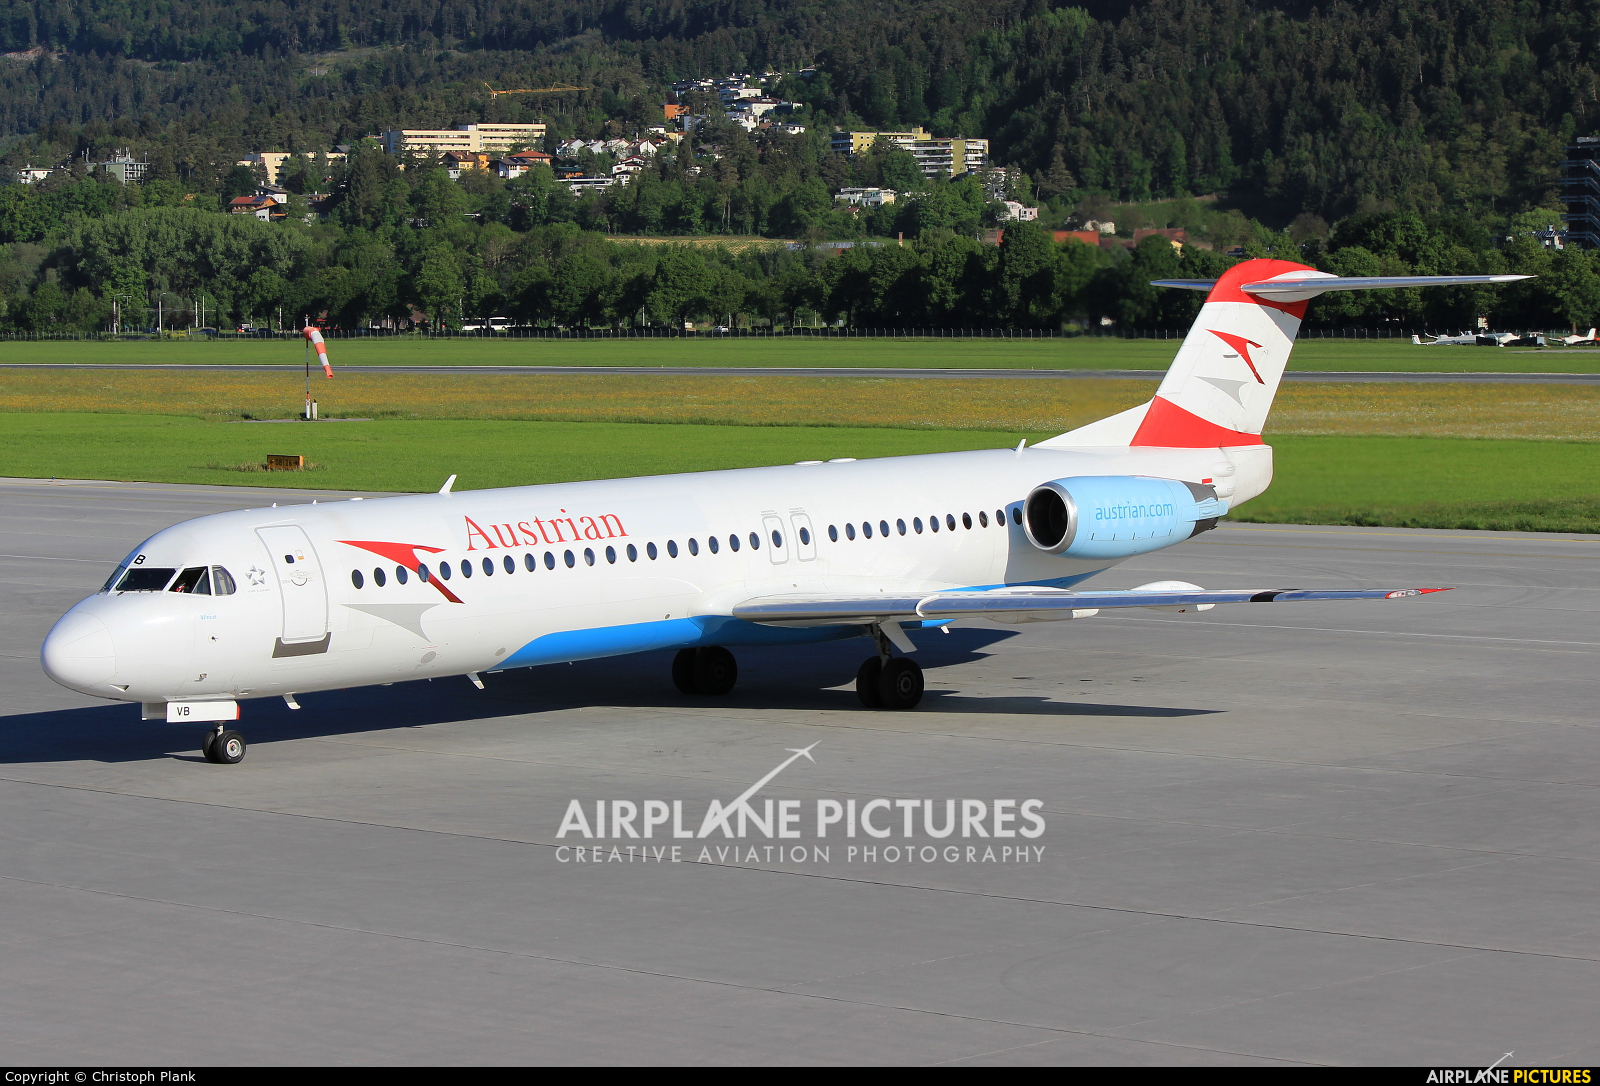 Austrian Airlines/Arrows/Tyrolean OE-LVB aircraft at Innsbruck